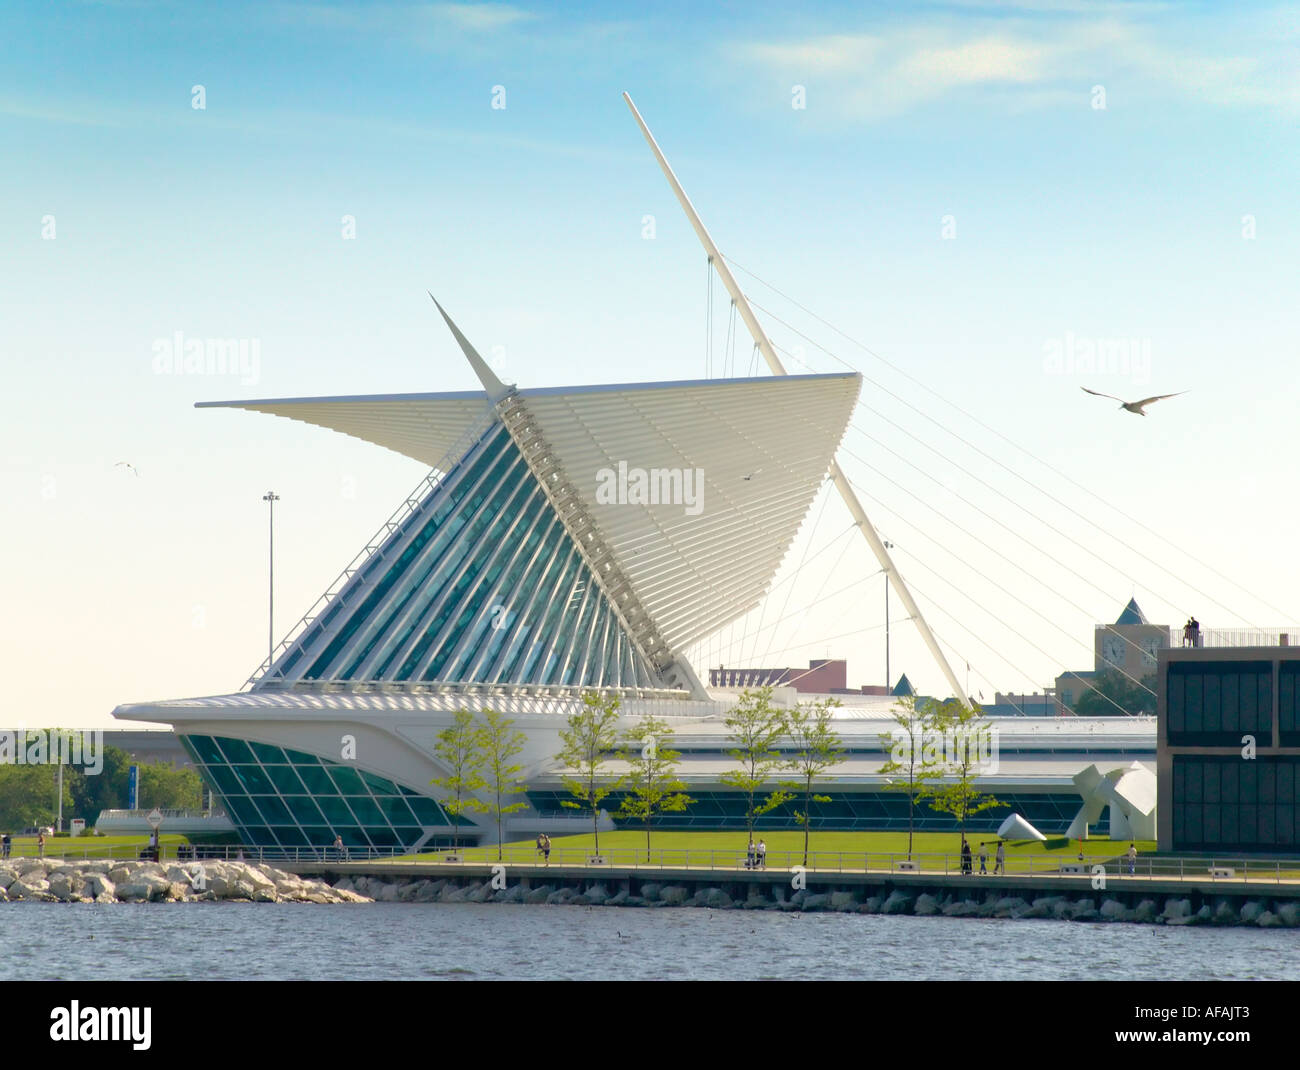 Calatrava aile de Milwaukee Art Museum, sur le lac Michigan Milwaukee Wisconsin USA Banque D'Images